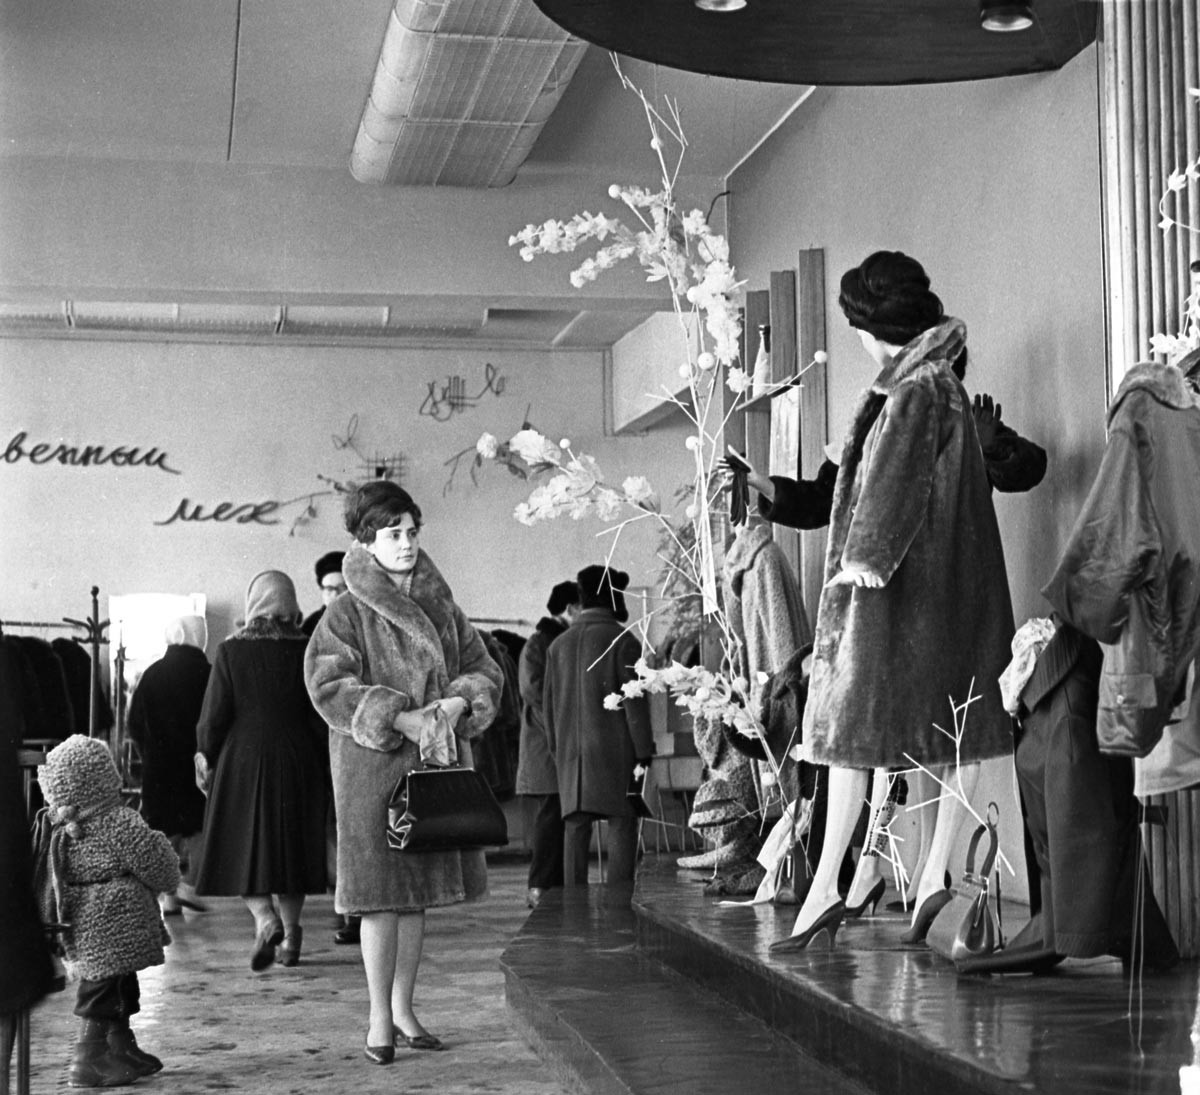 The Synthetics store on Moscow's Kalinin Prospekt, now Novy Arbat Street, 1965